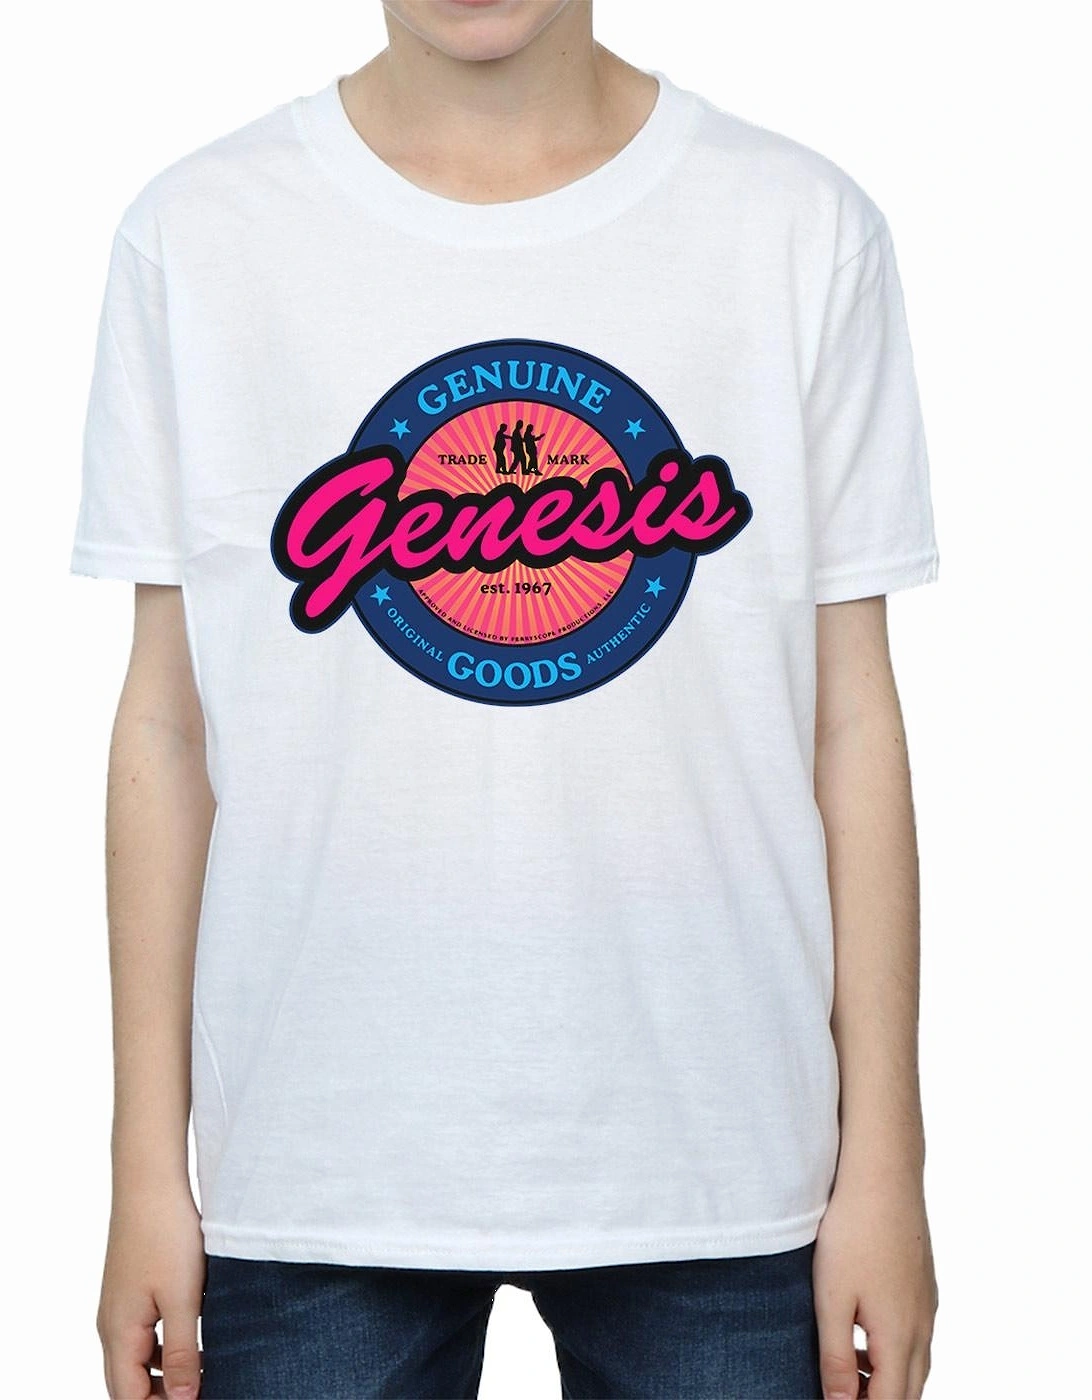 Boys Neon Logo T-Shirt